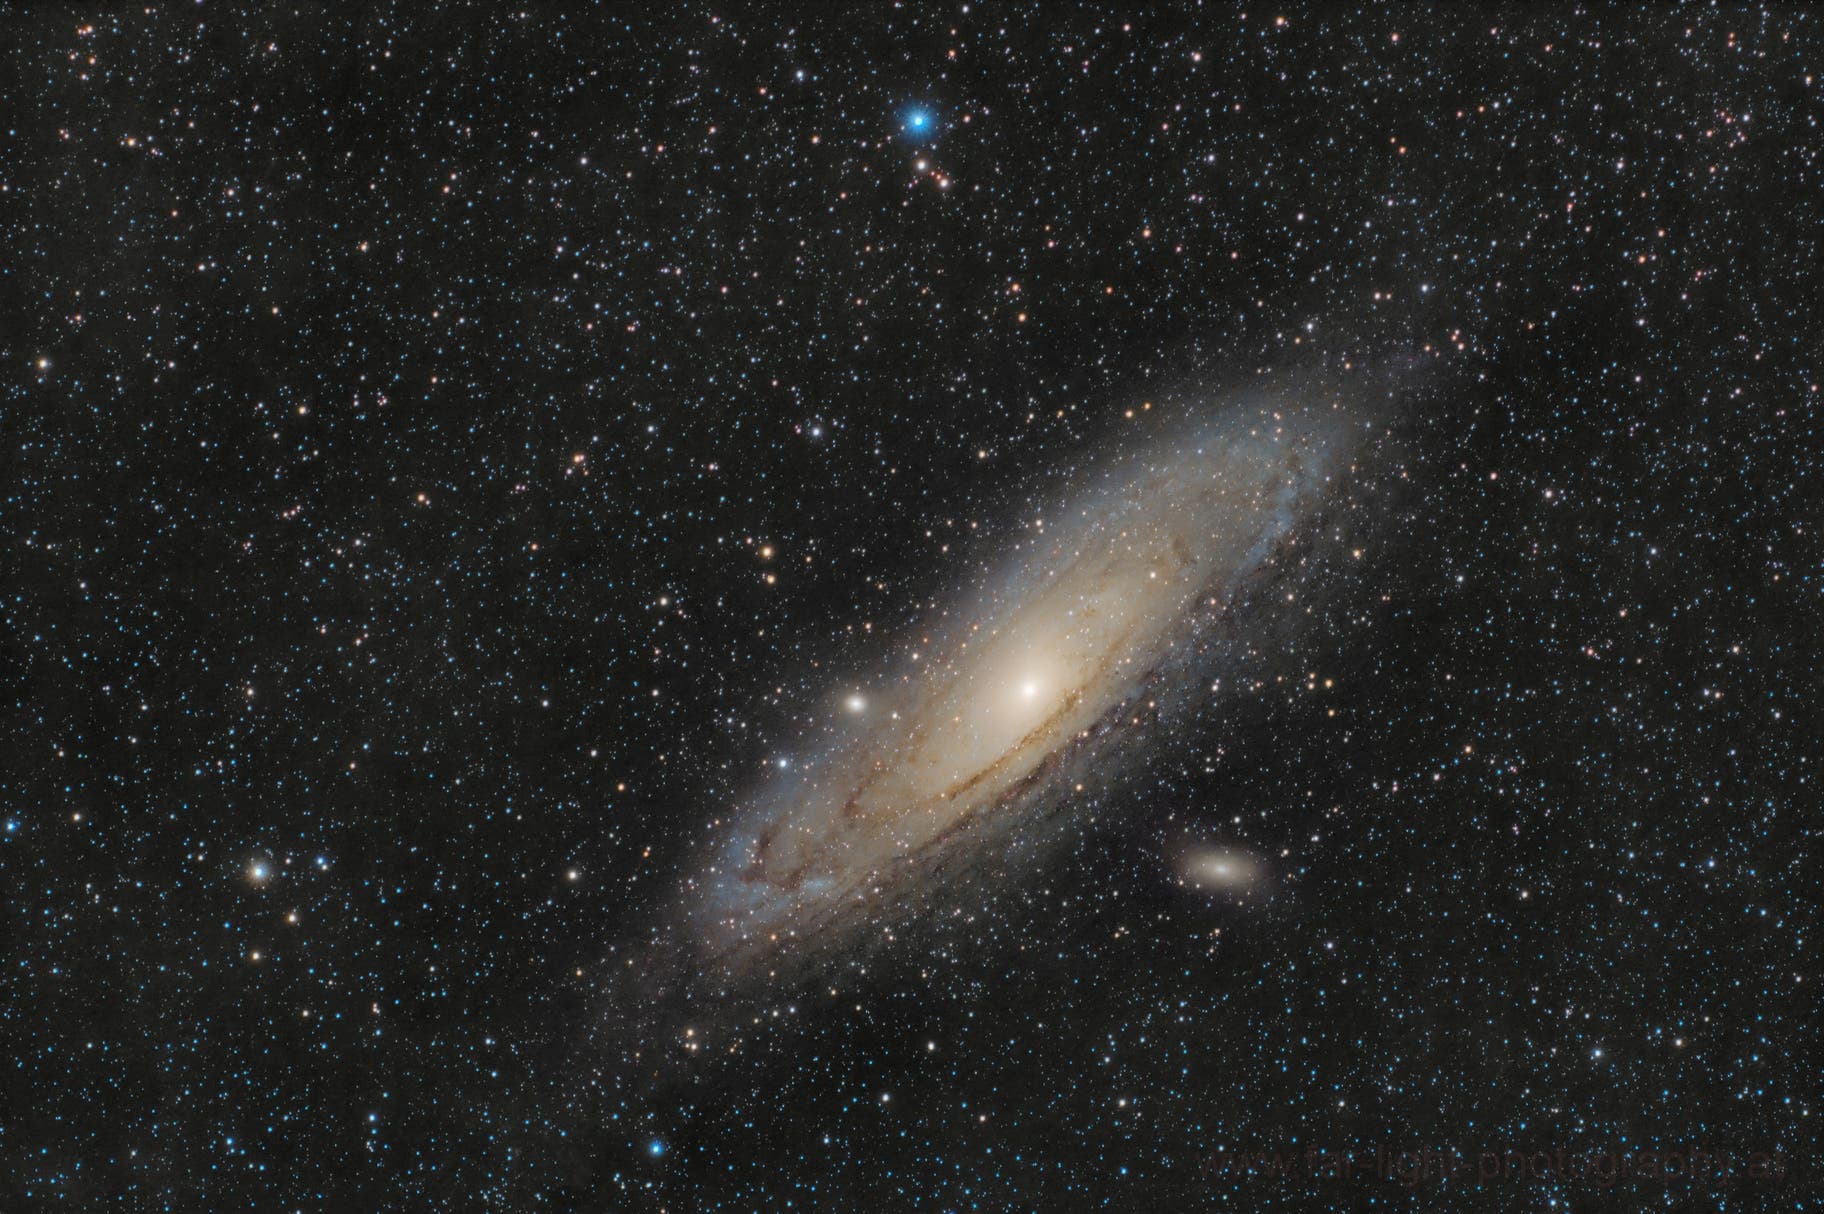 Andromedagalaxie im weiten Feld